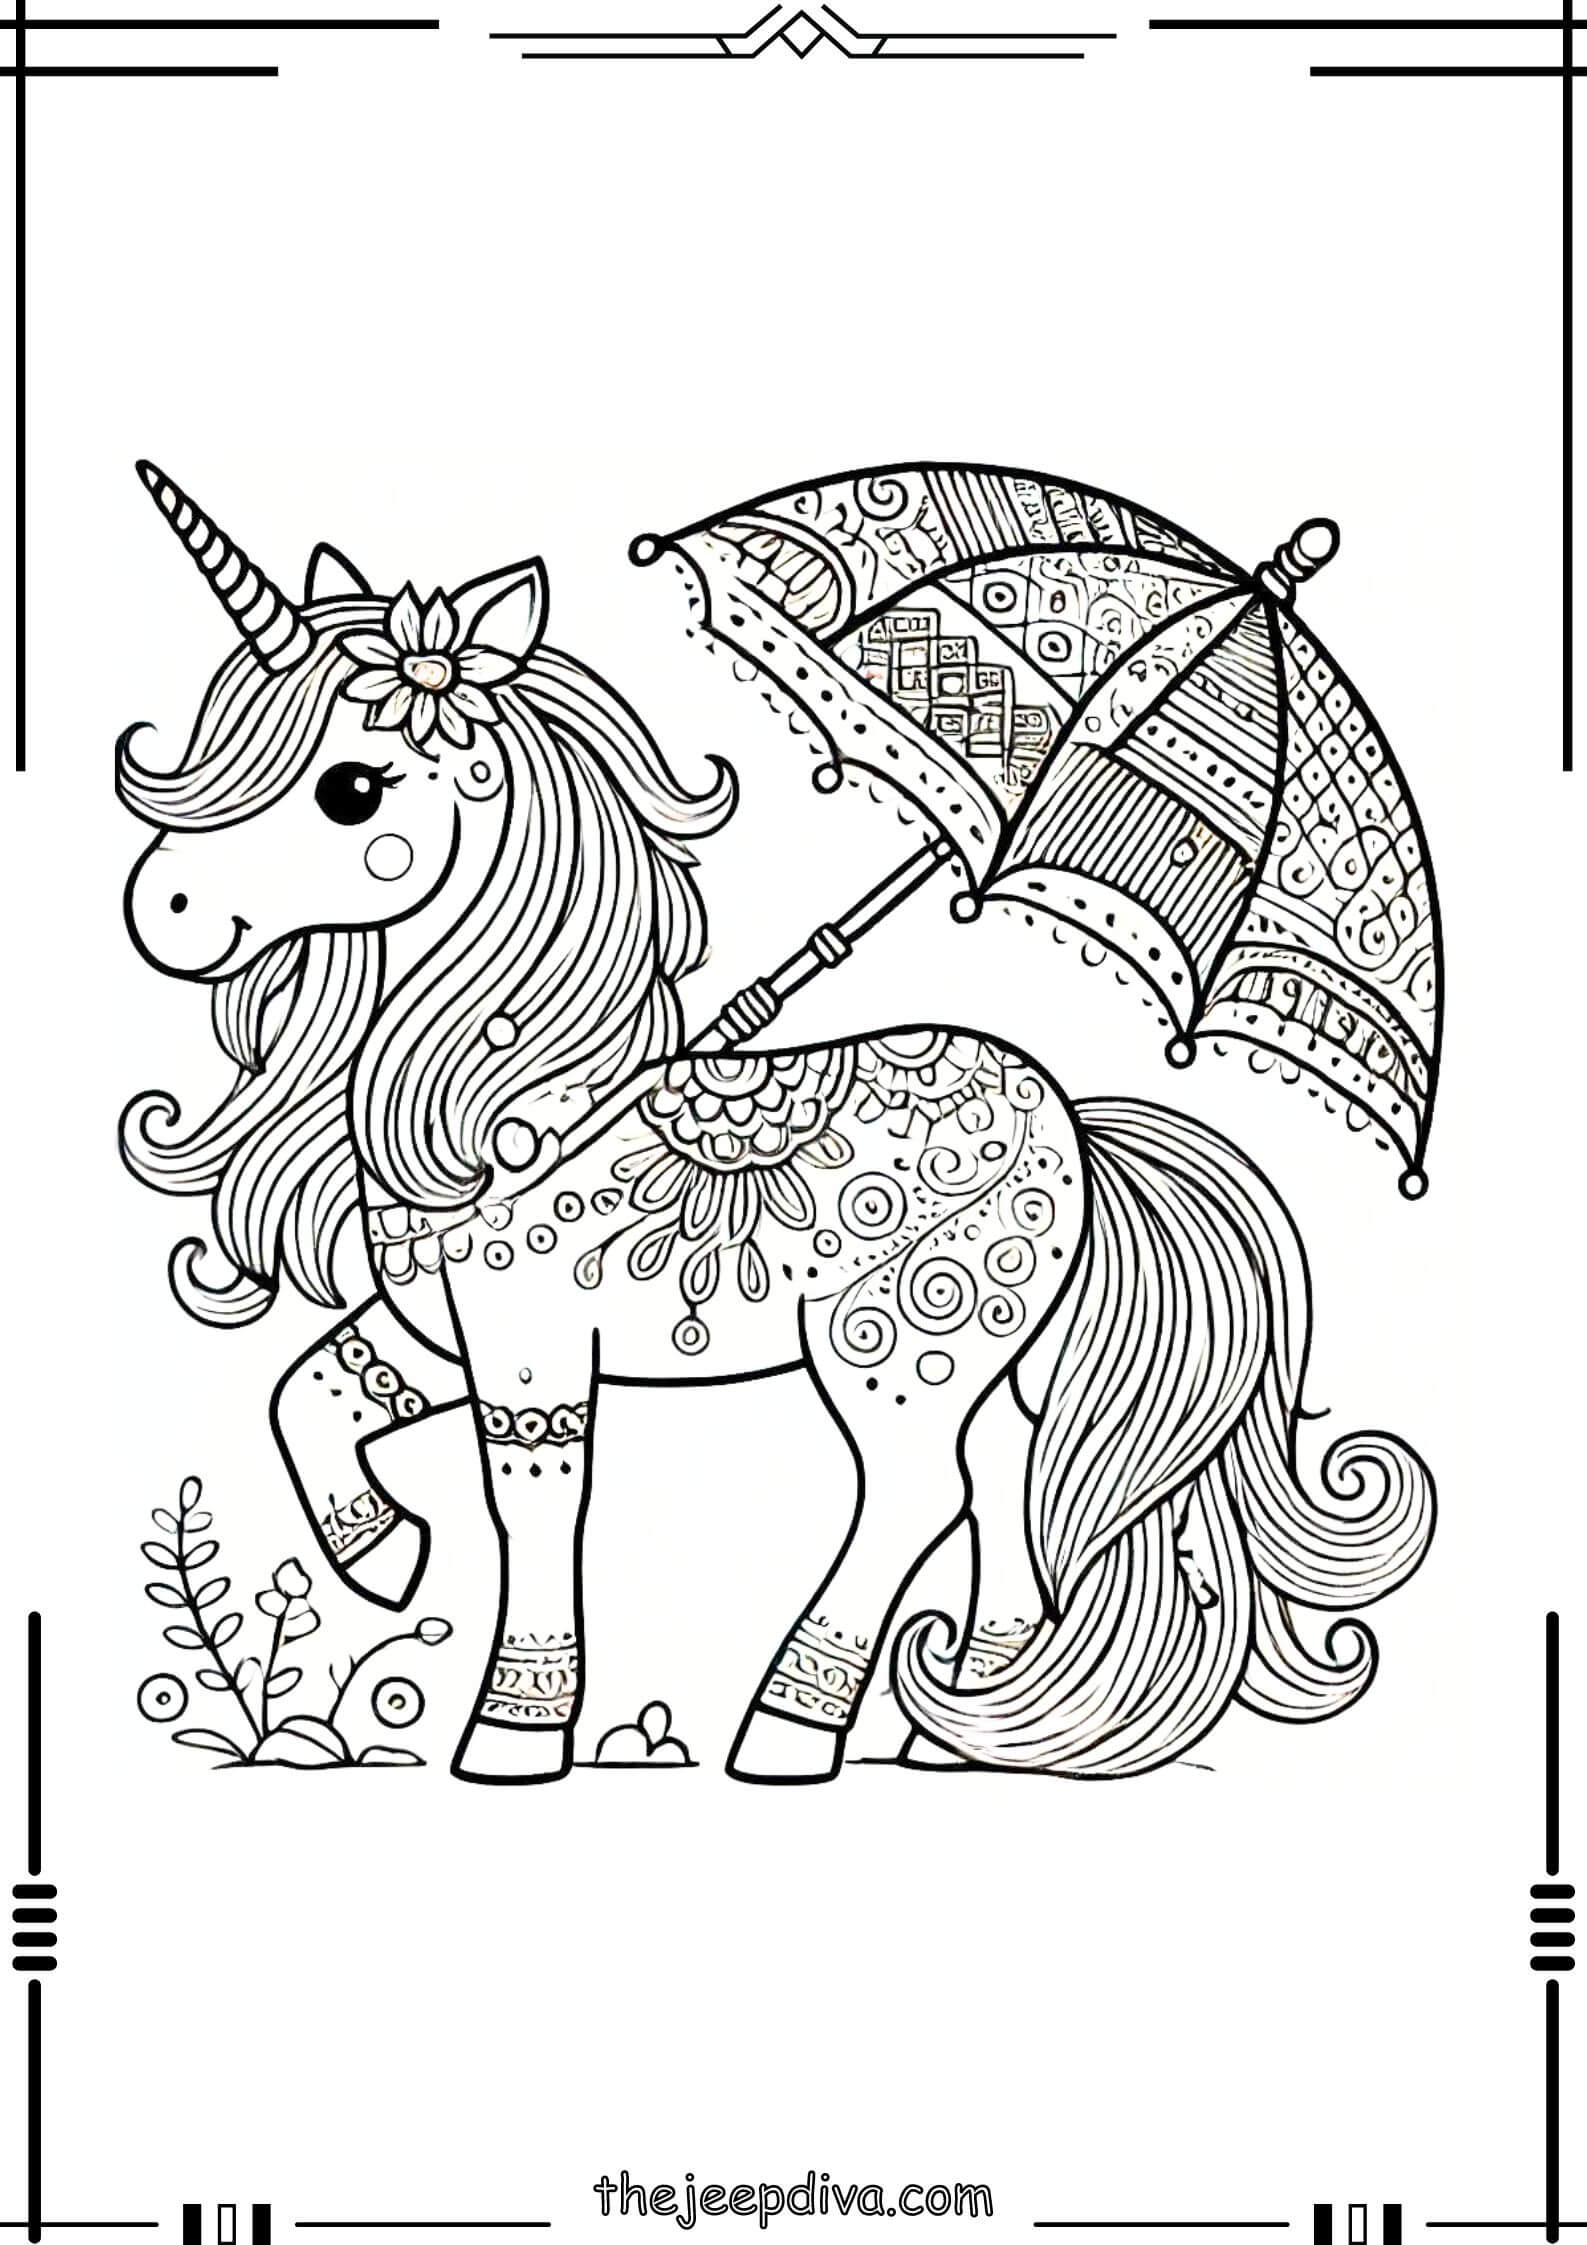 unicorn-coloring-page-medium-22